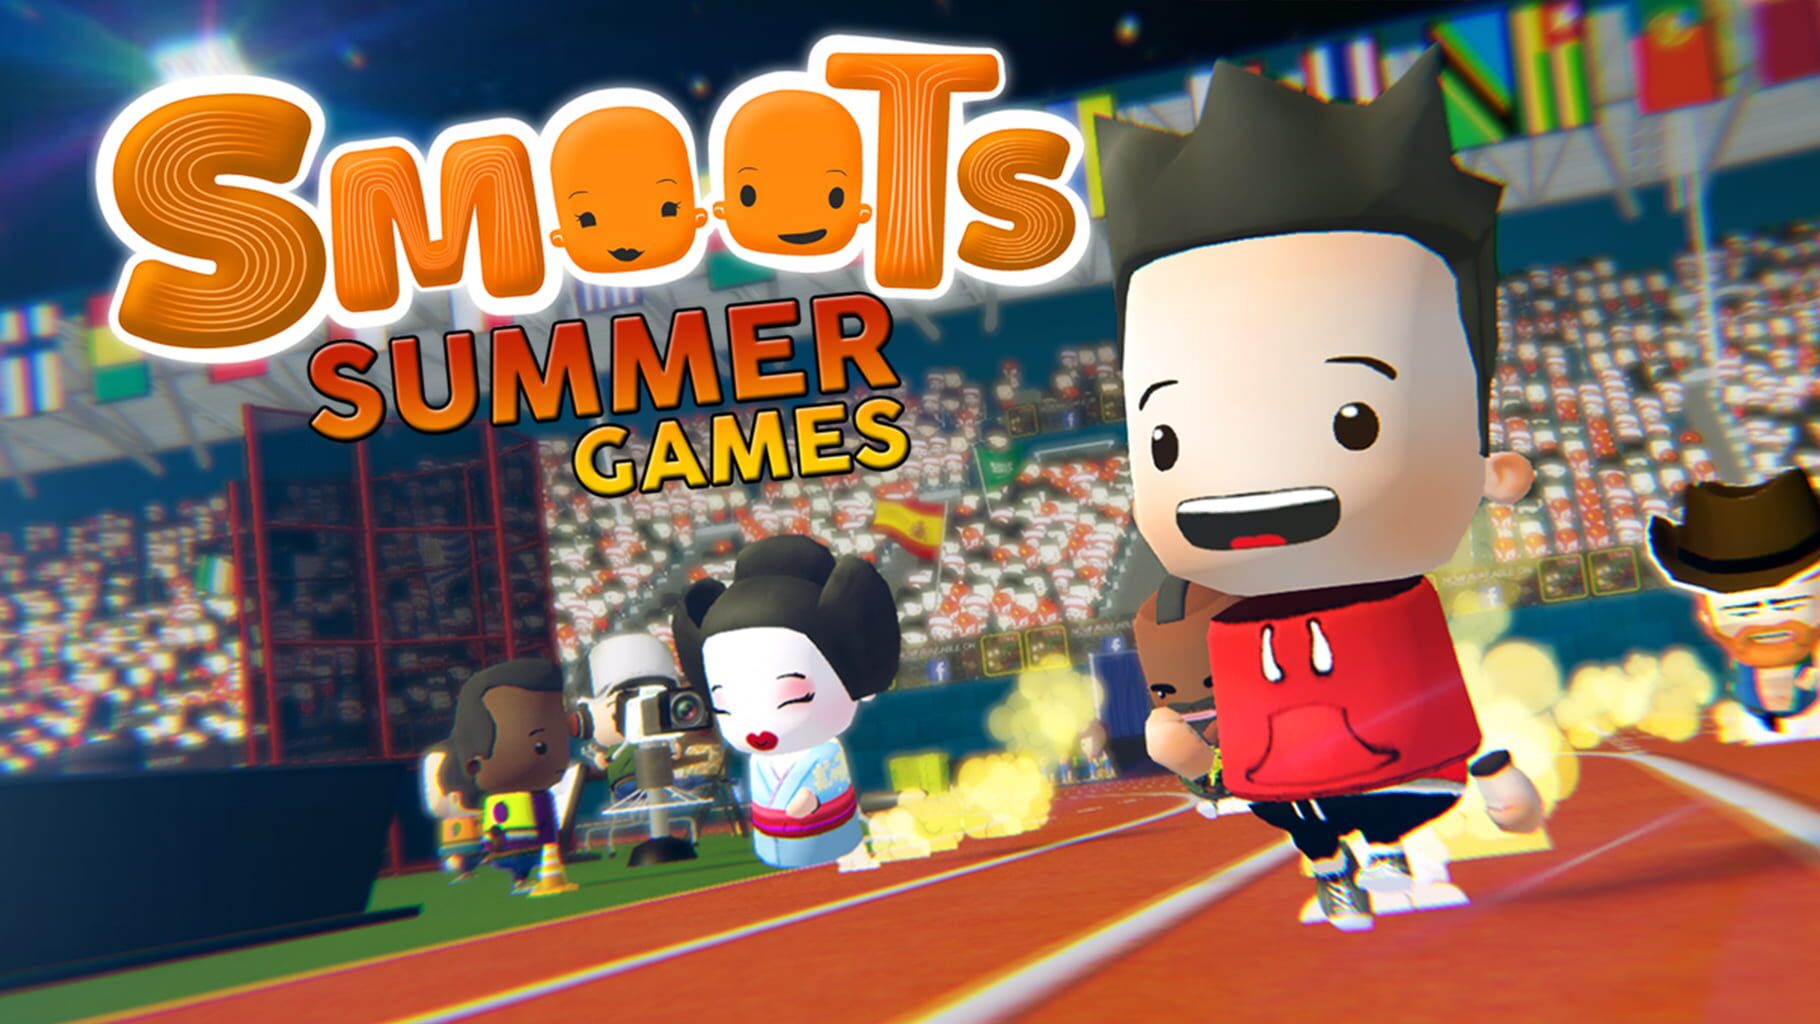 Smoots Summer Games Image